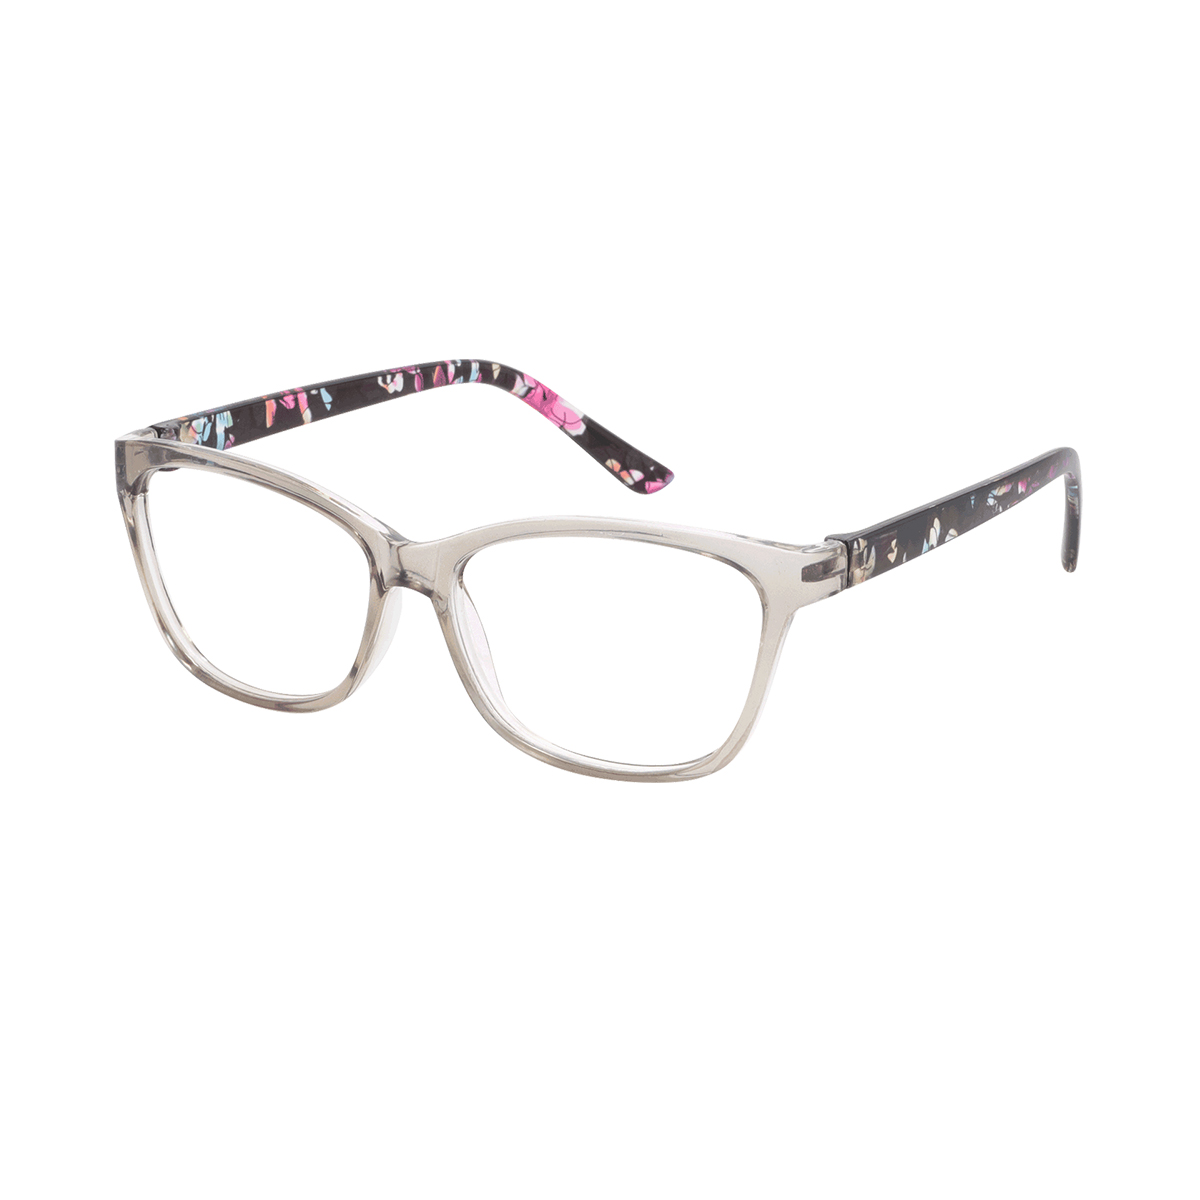 Naparis - Square Gray-Floral Reading Glasses for Women